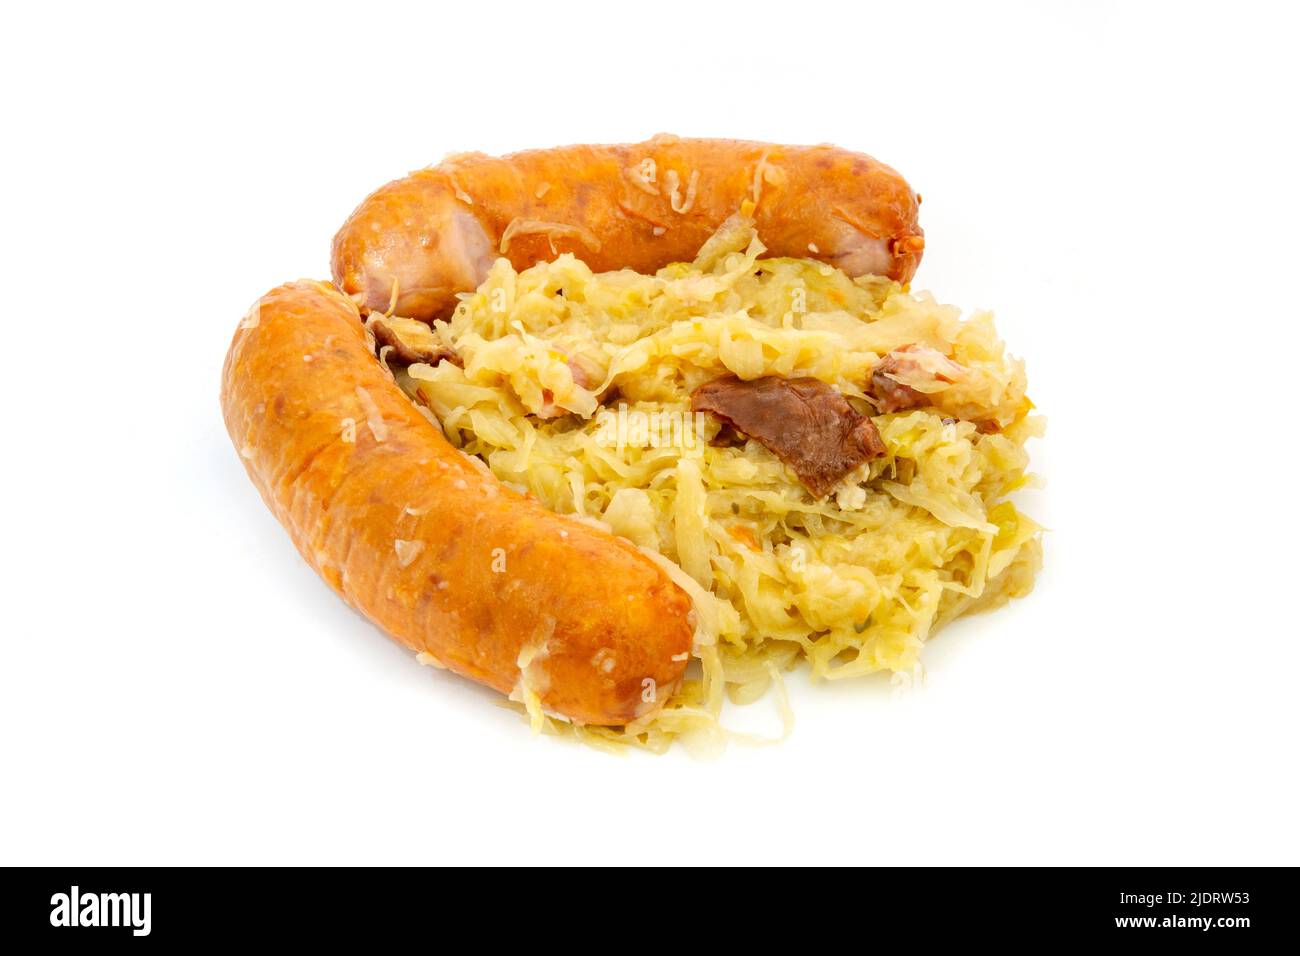 Sausage and sauerkraut on a white background Stock Photo